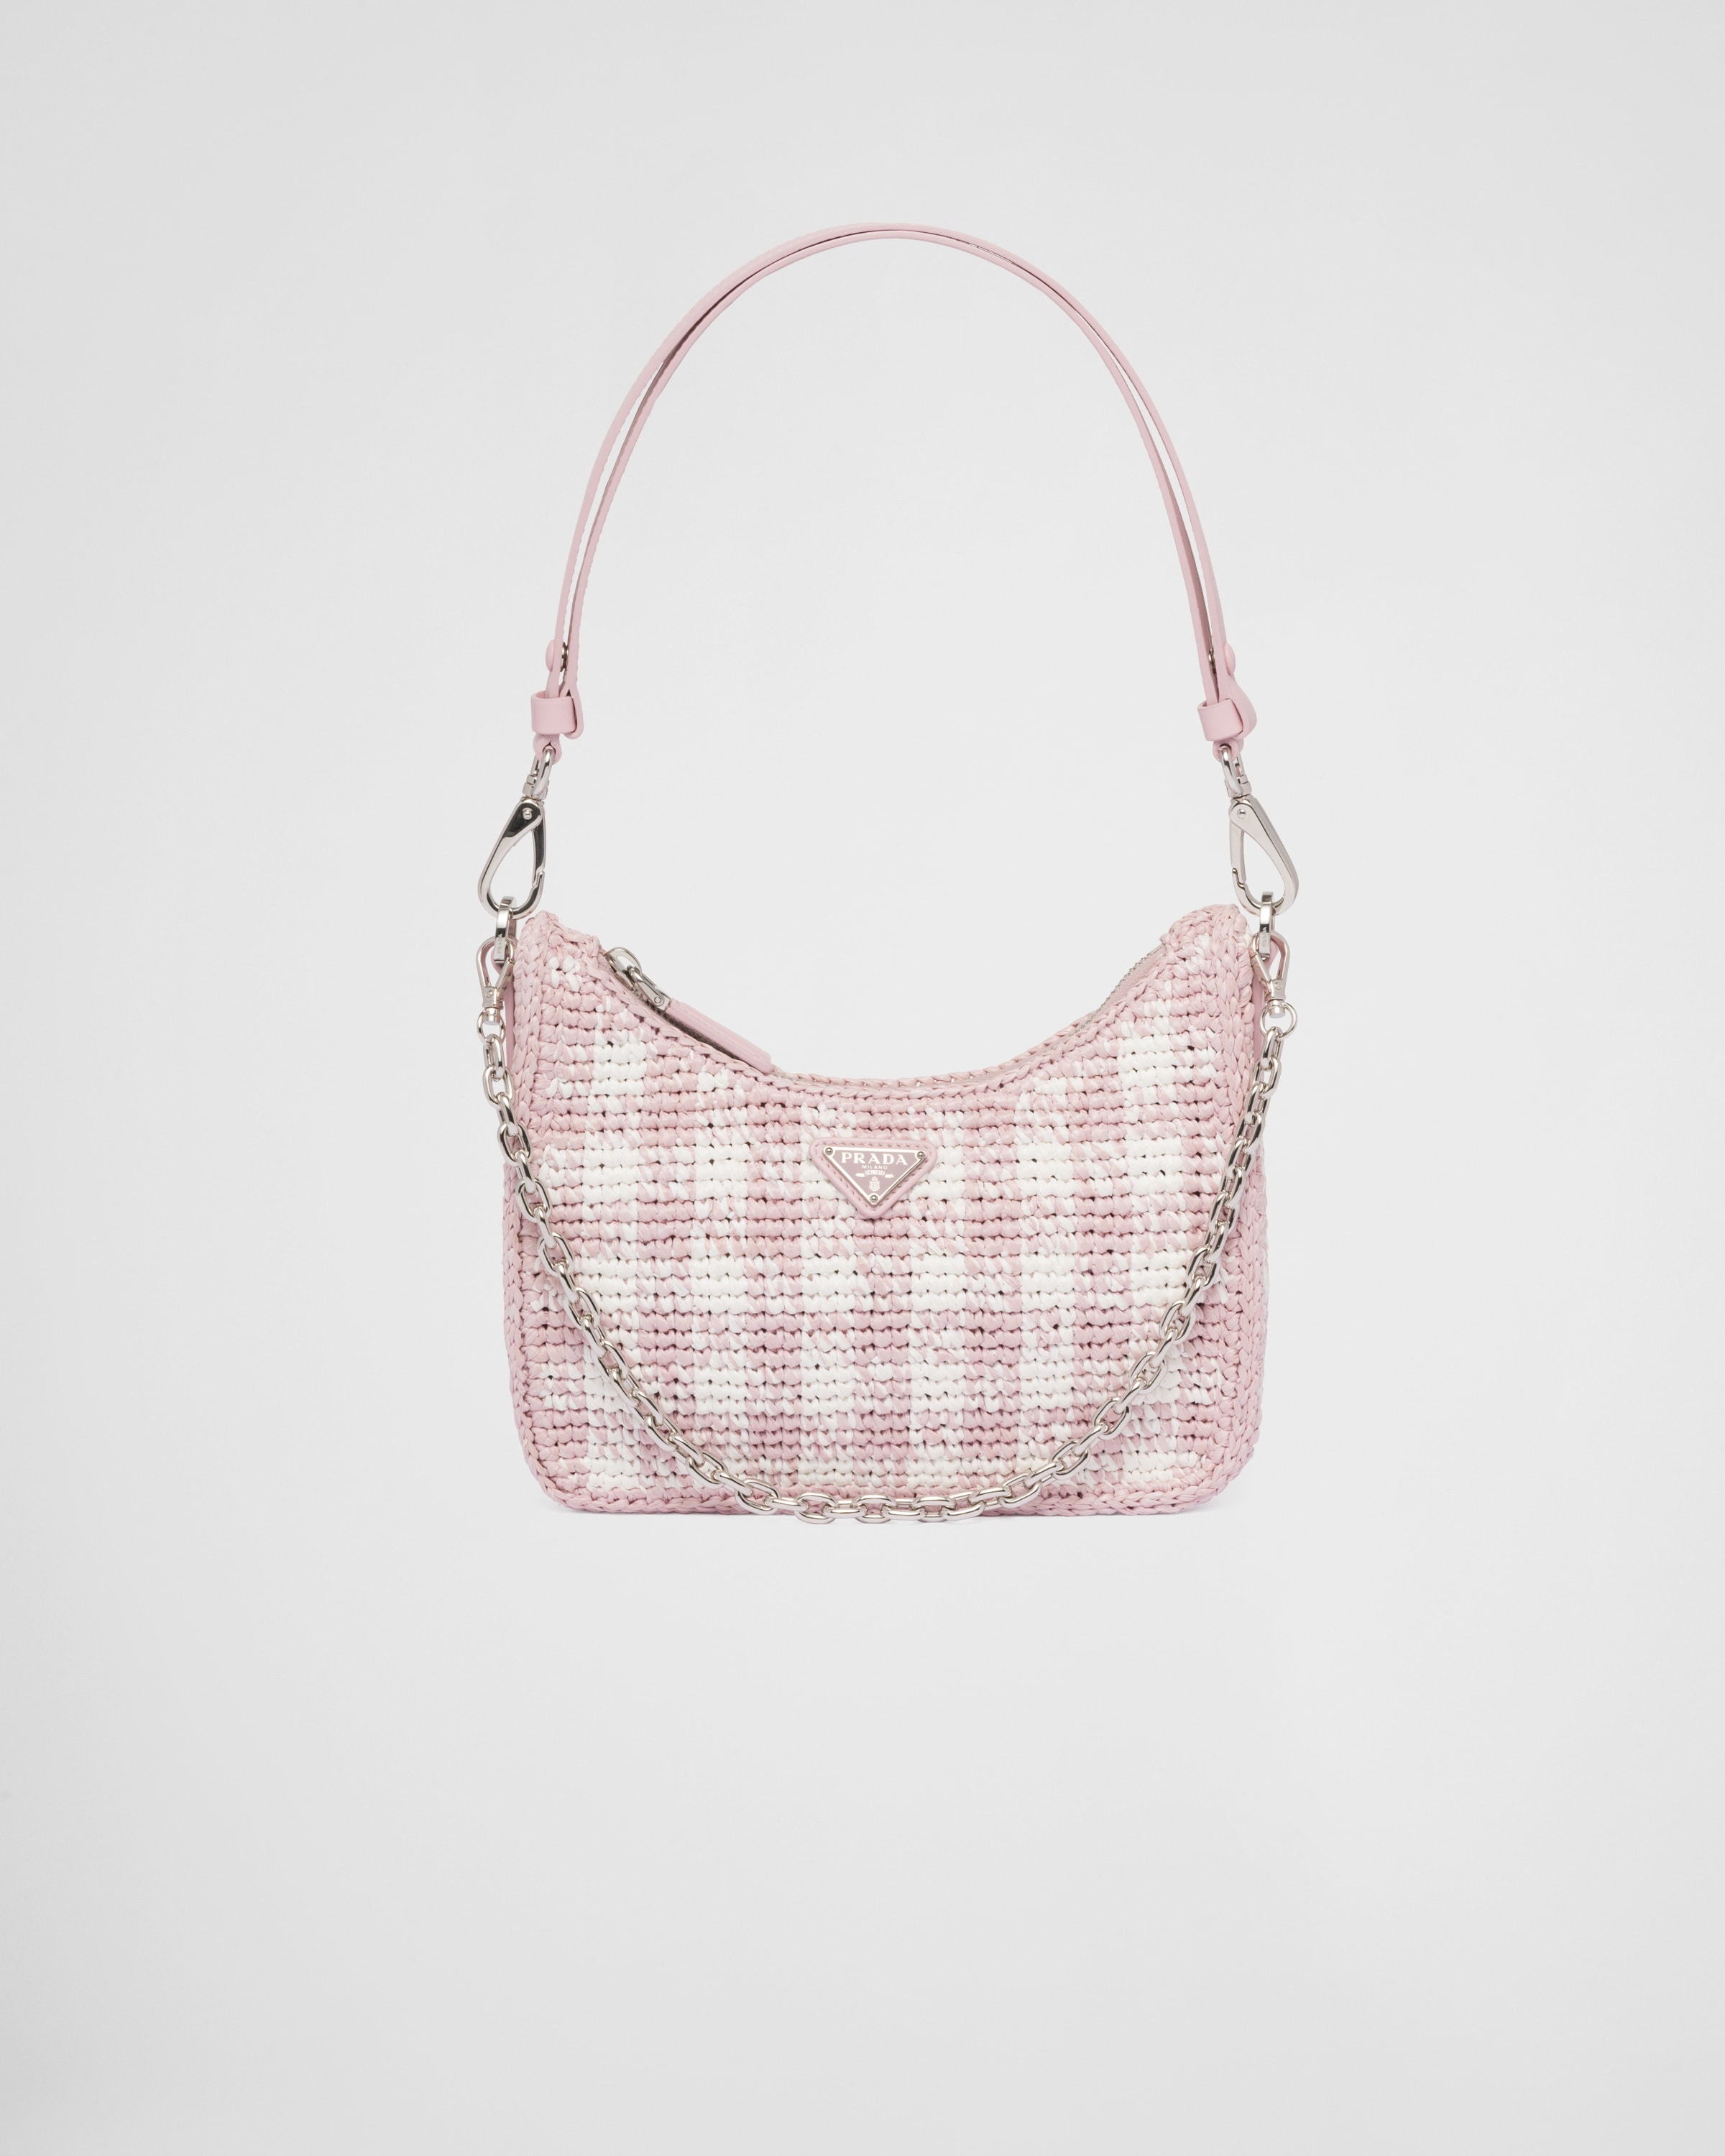 Prada Re-edition crochet shoulder bag